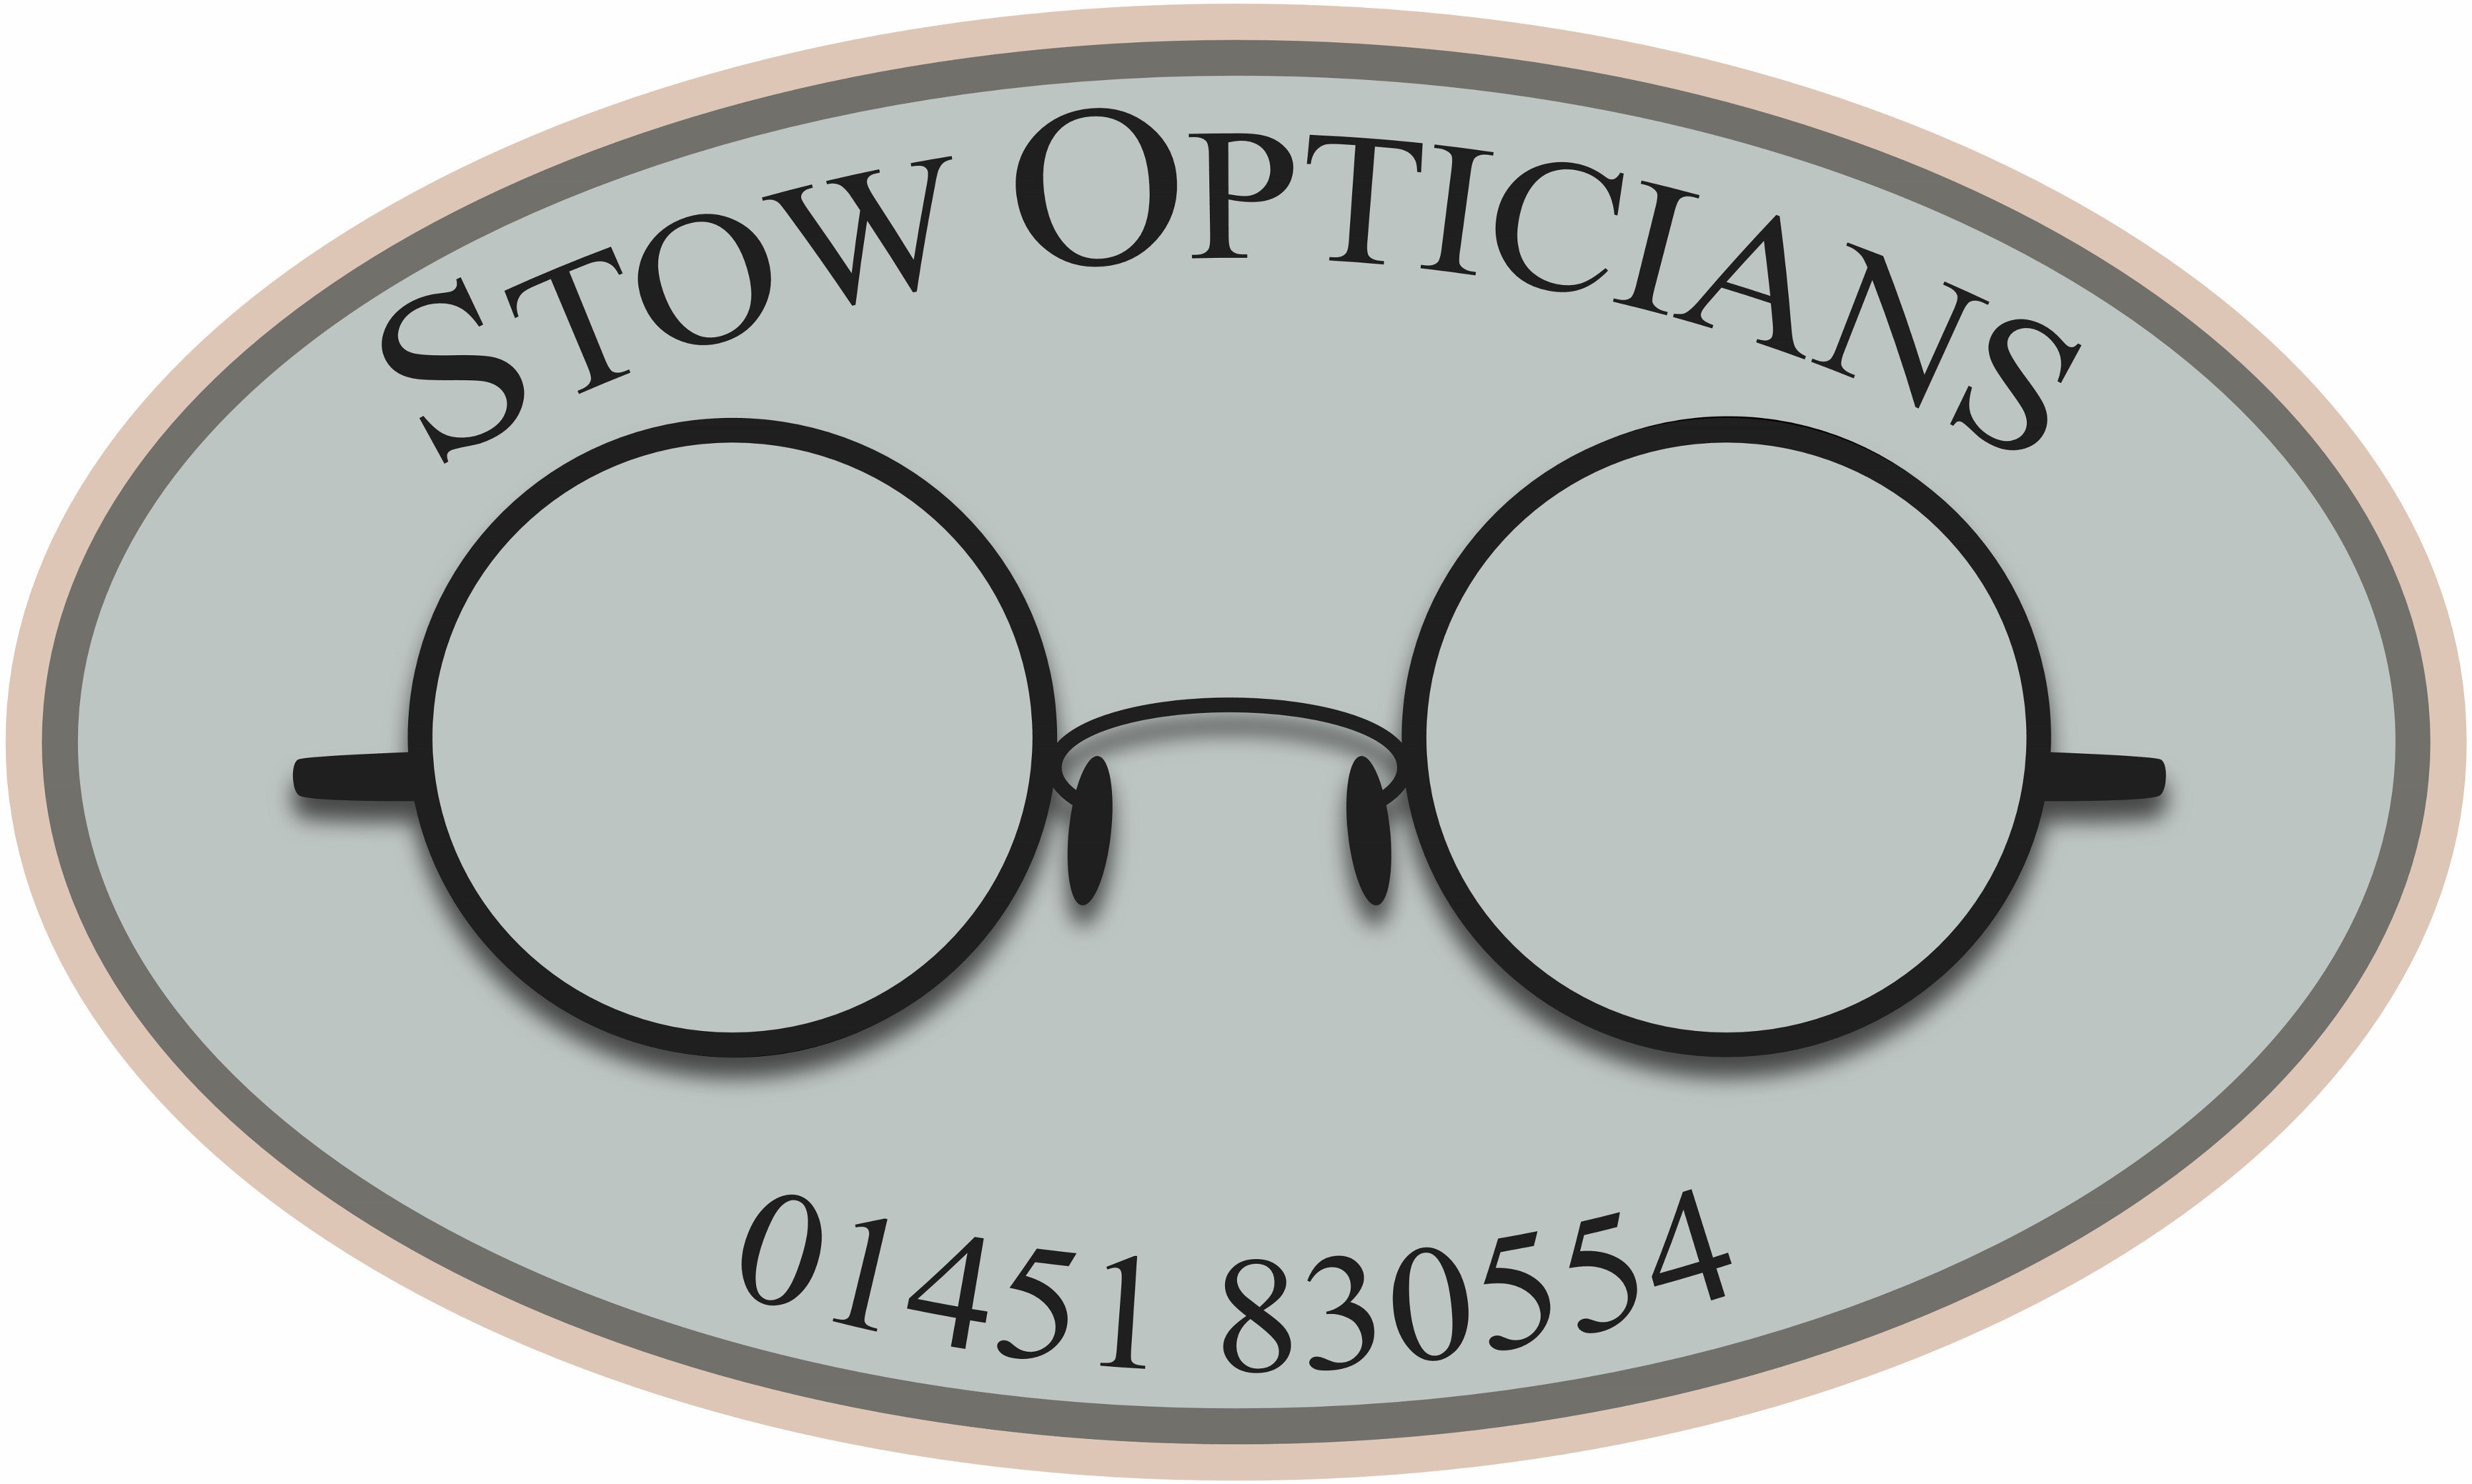 Stow Opticians